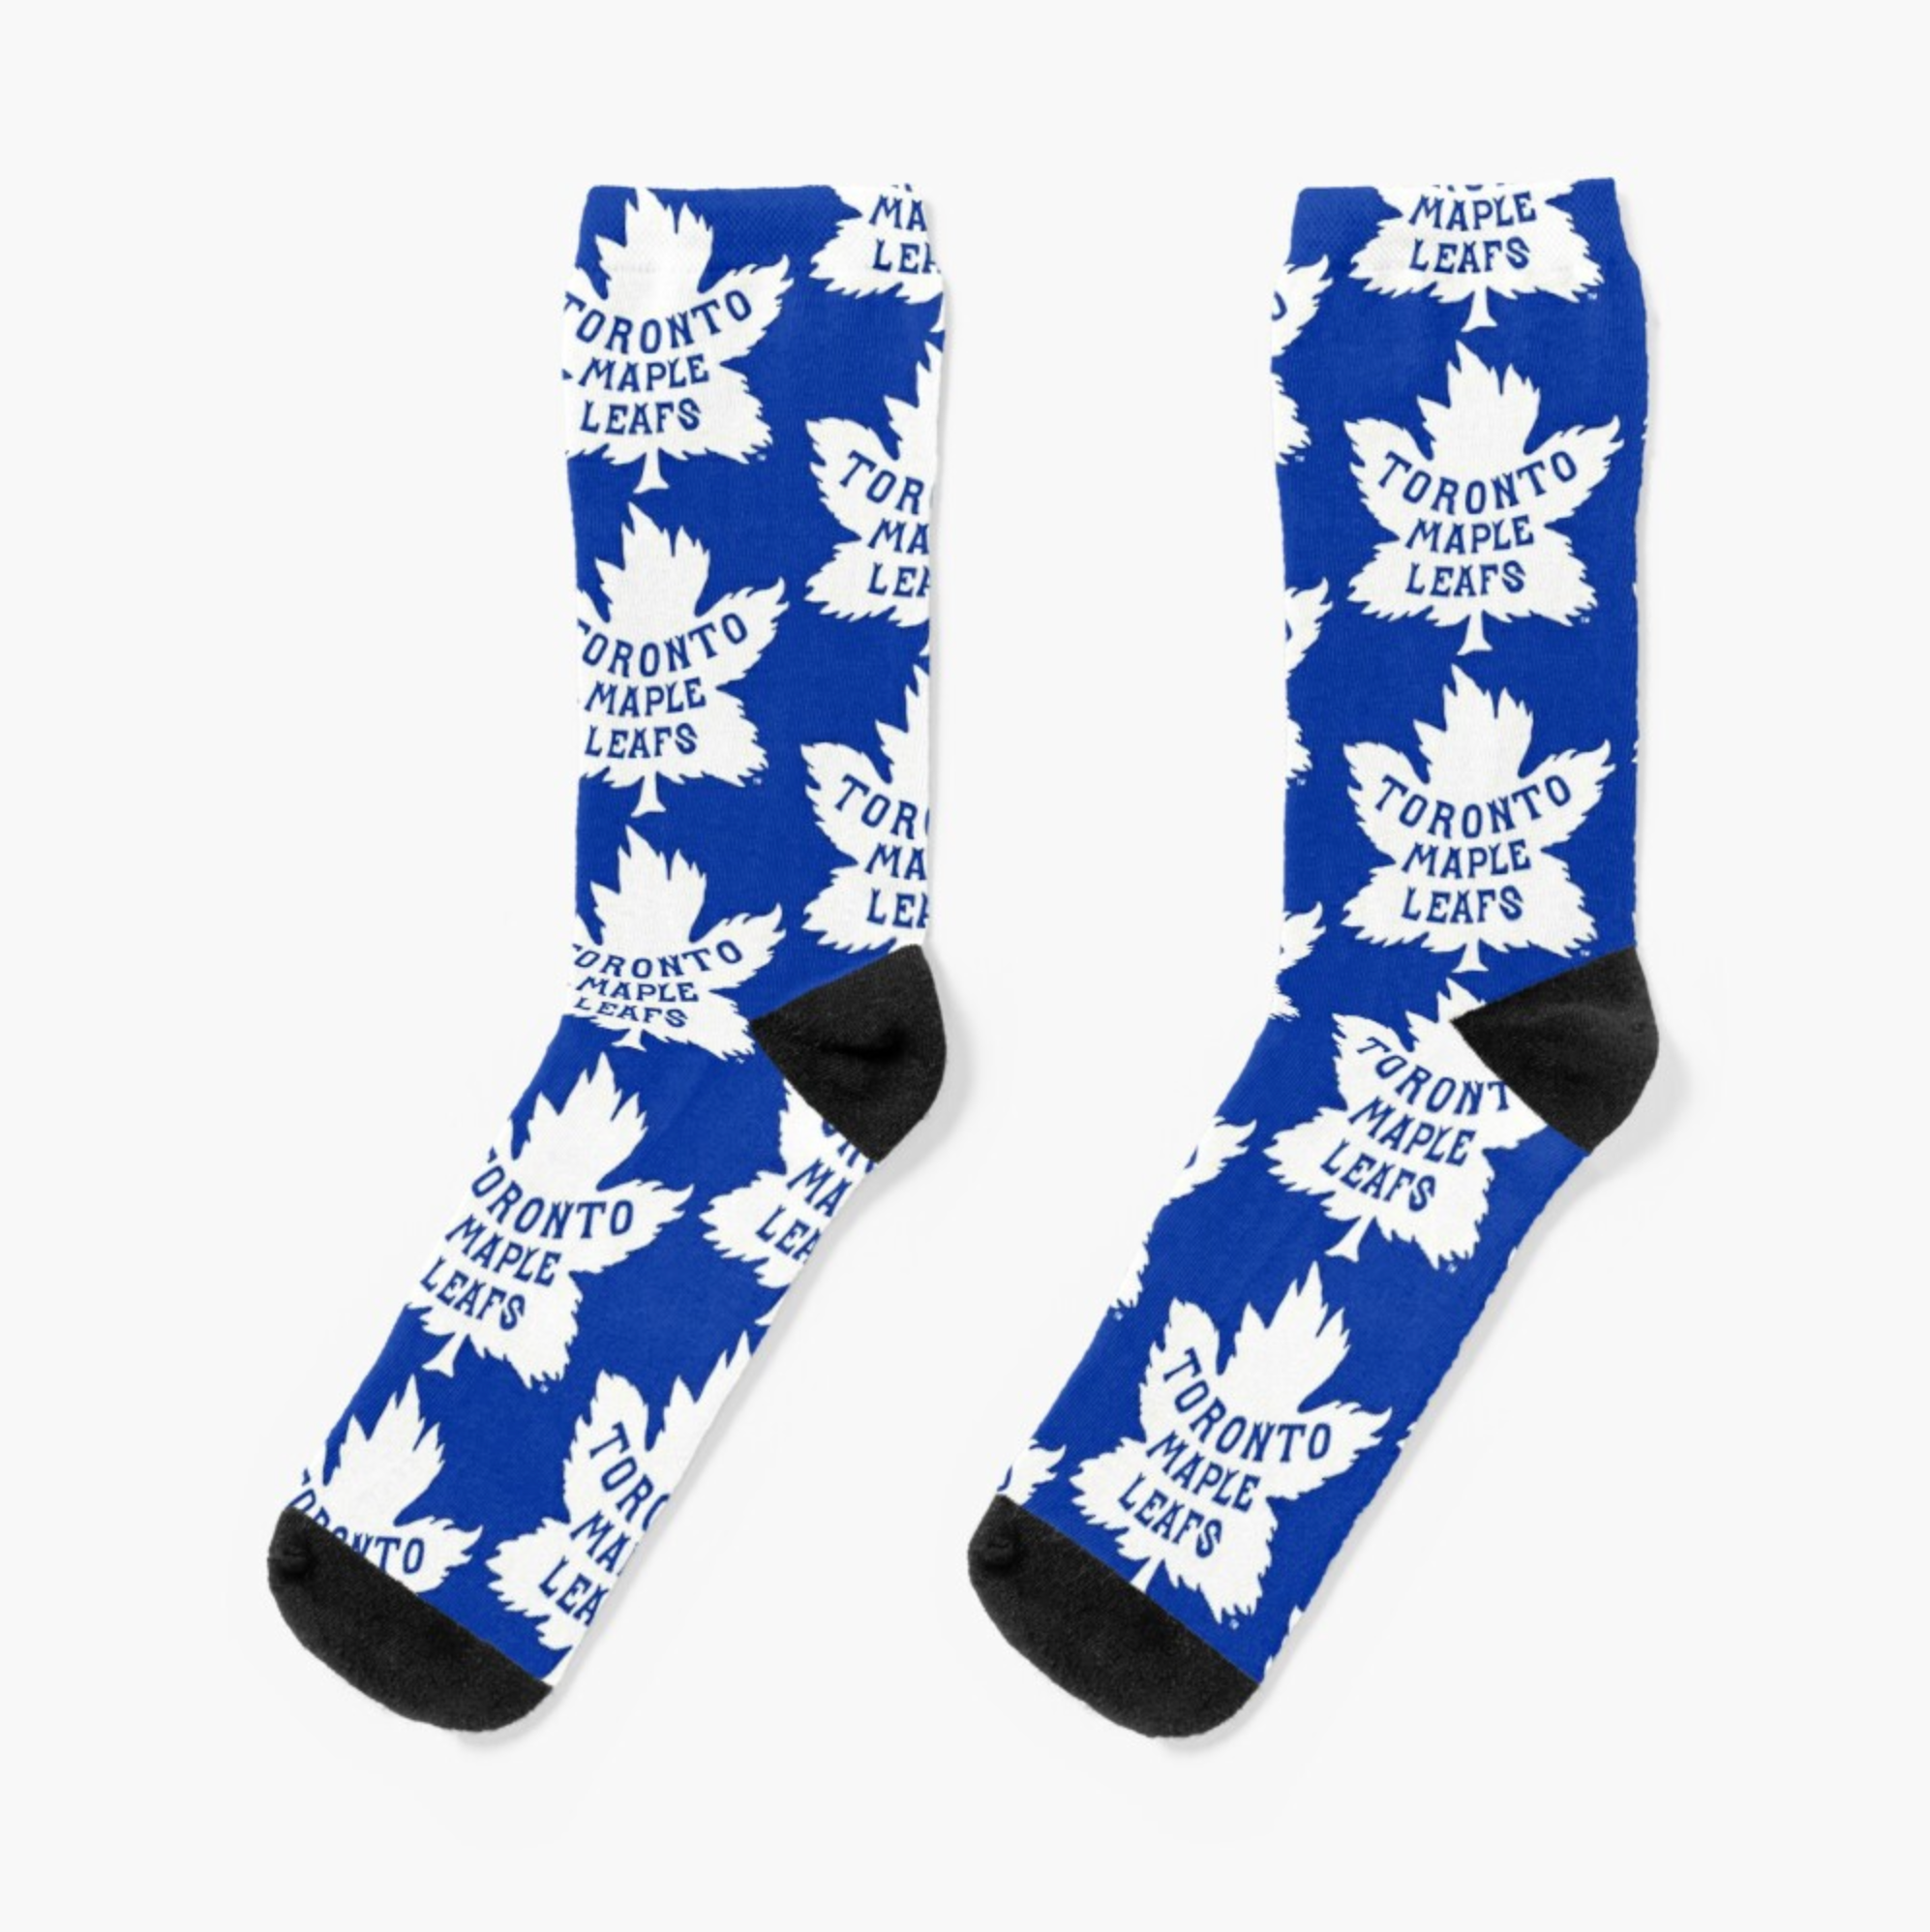 Toronto Maple Leafs sock three